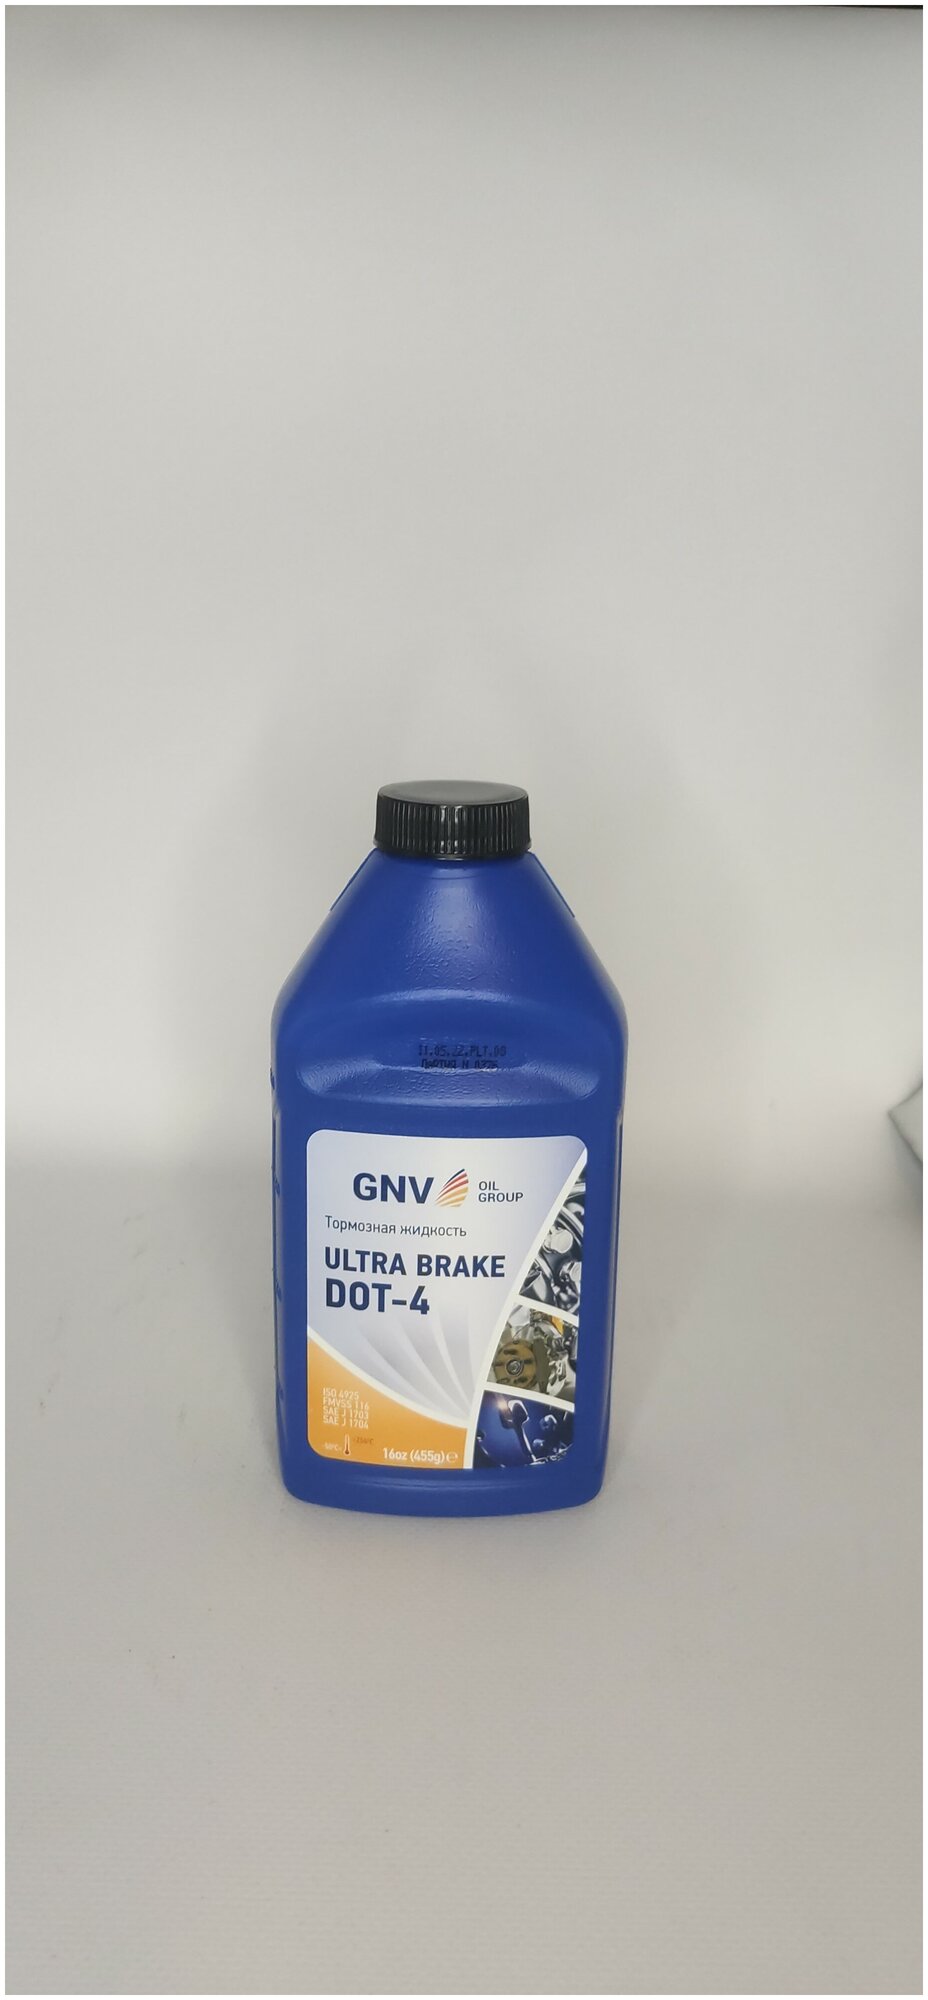 GNV Ultra Brake DOT-4 (455 мл.)